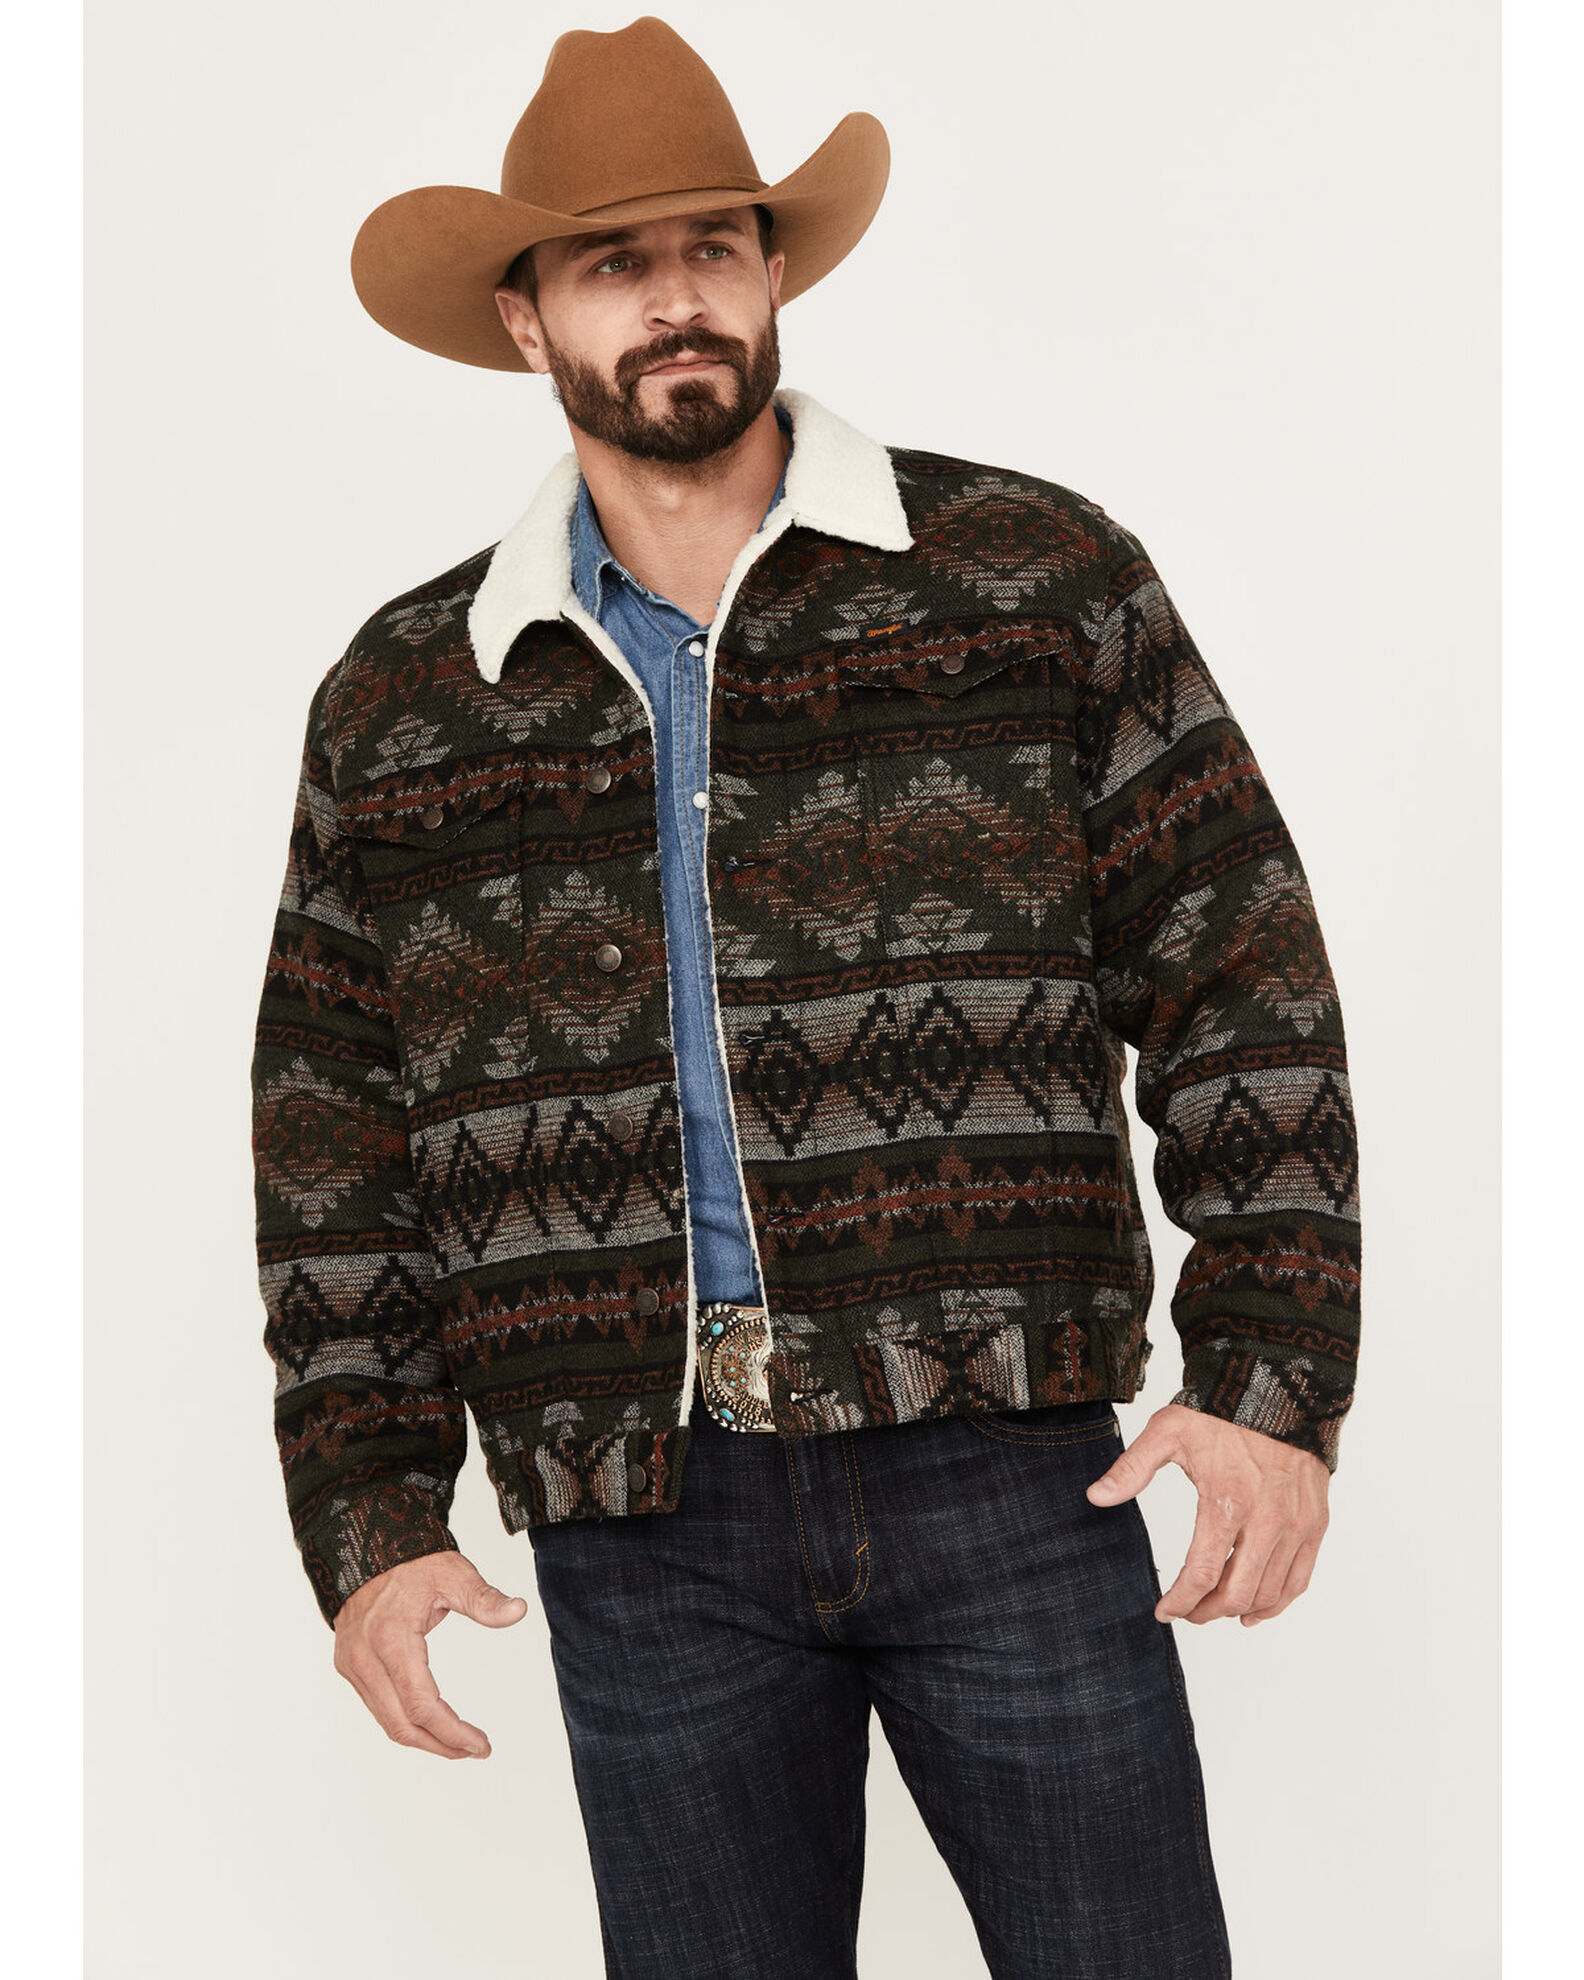 Product Name: Wrangler Men's Southwestern Print Sherpa Button Down ...